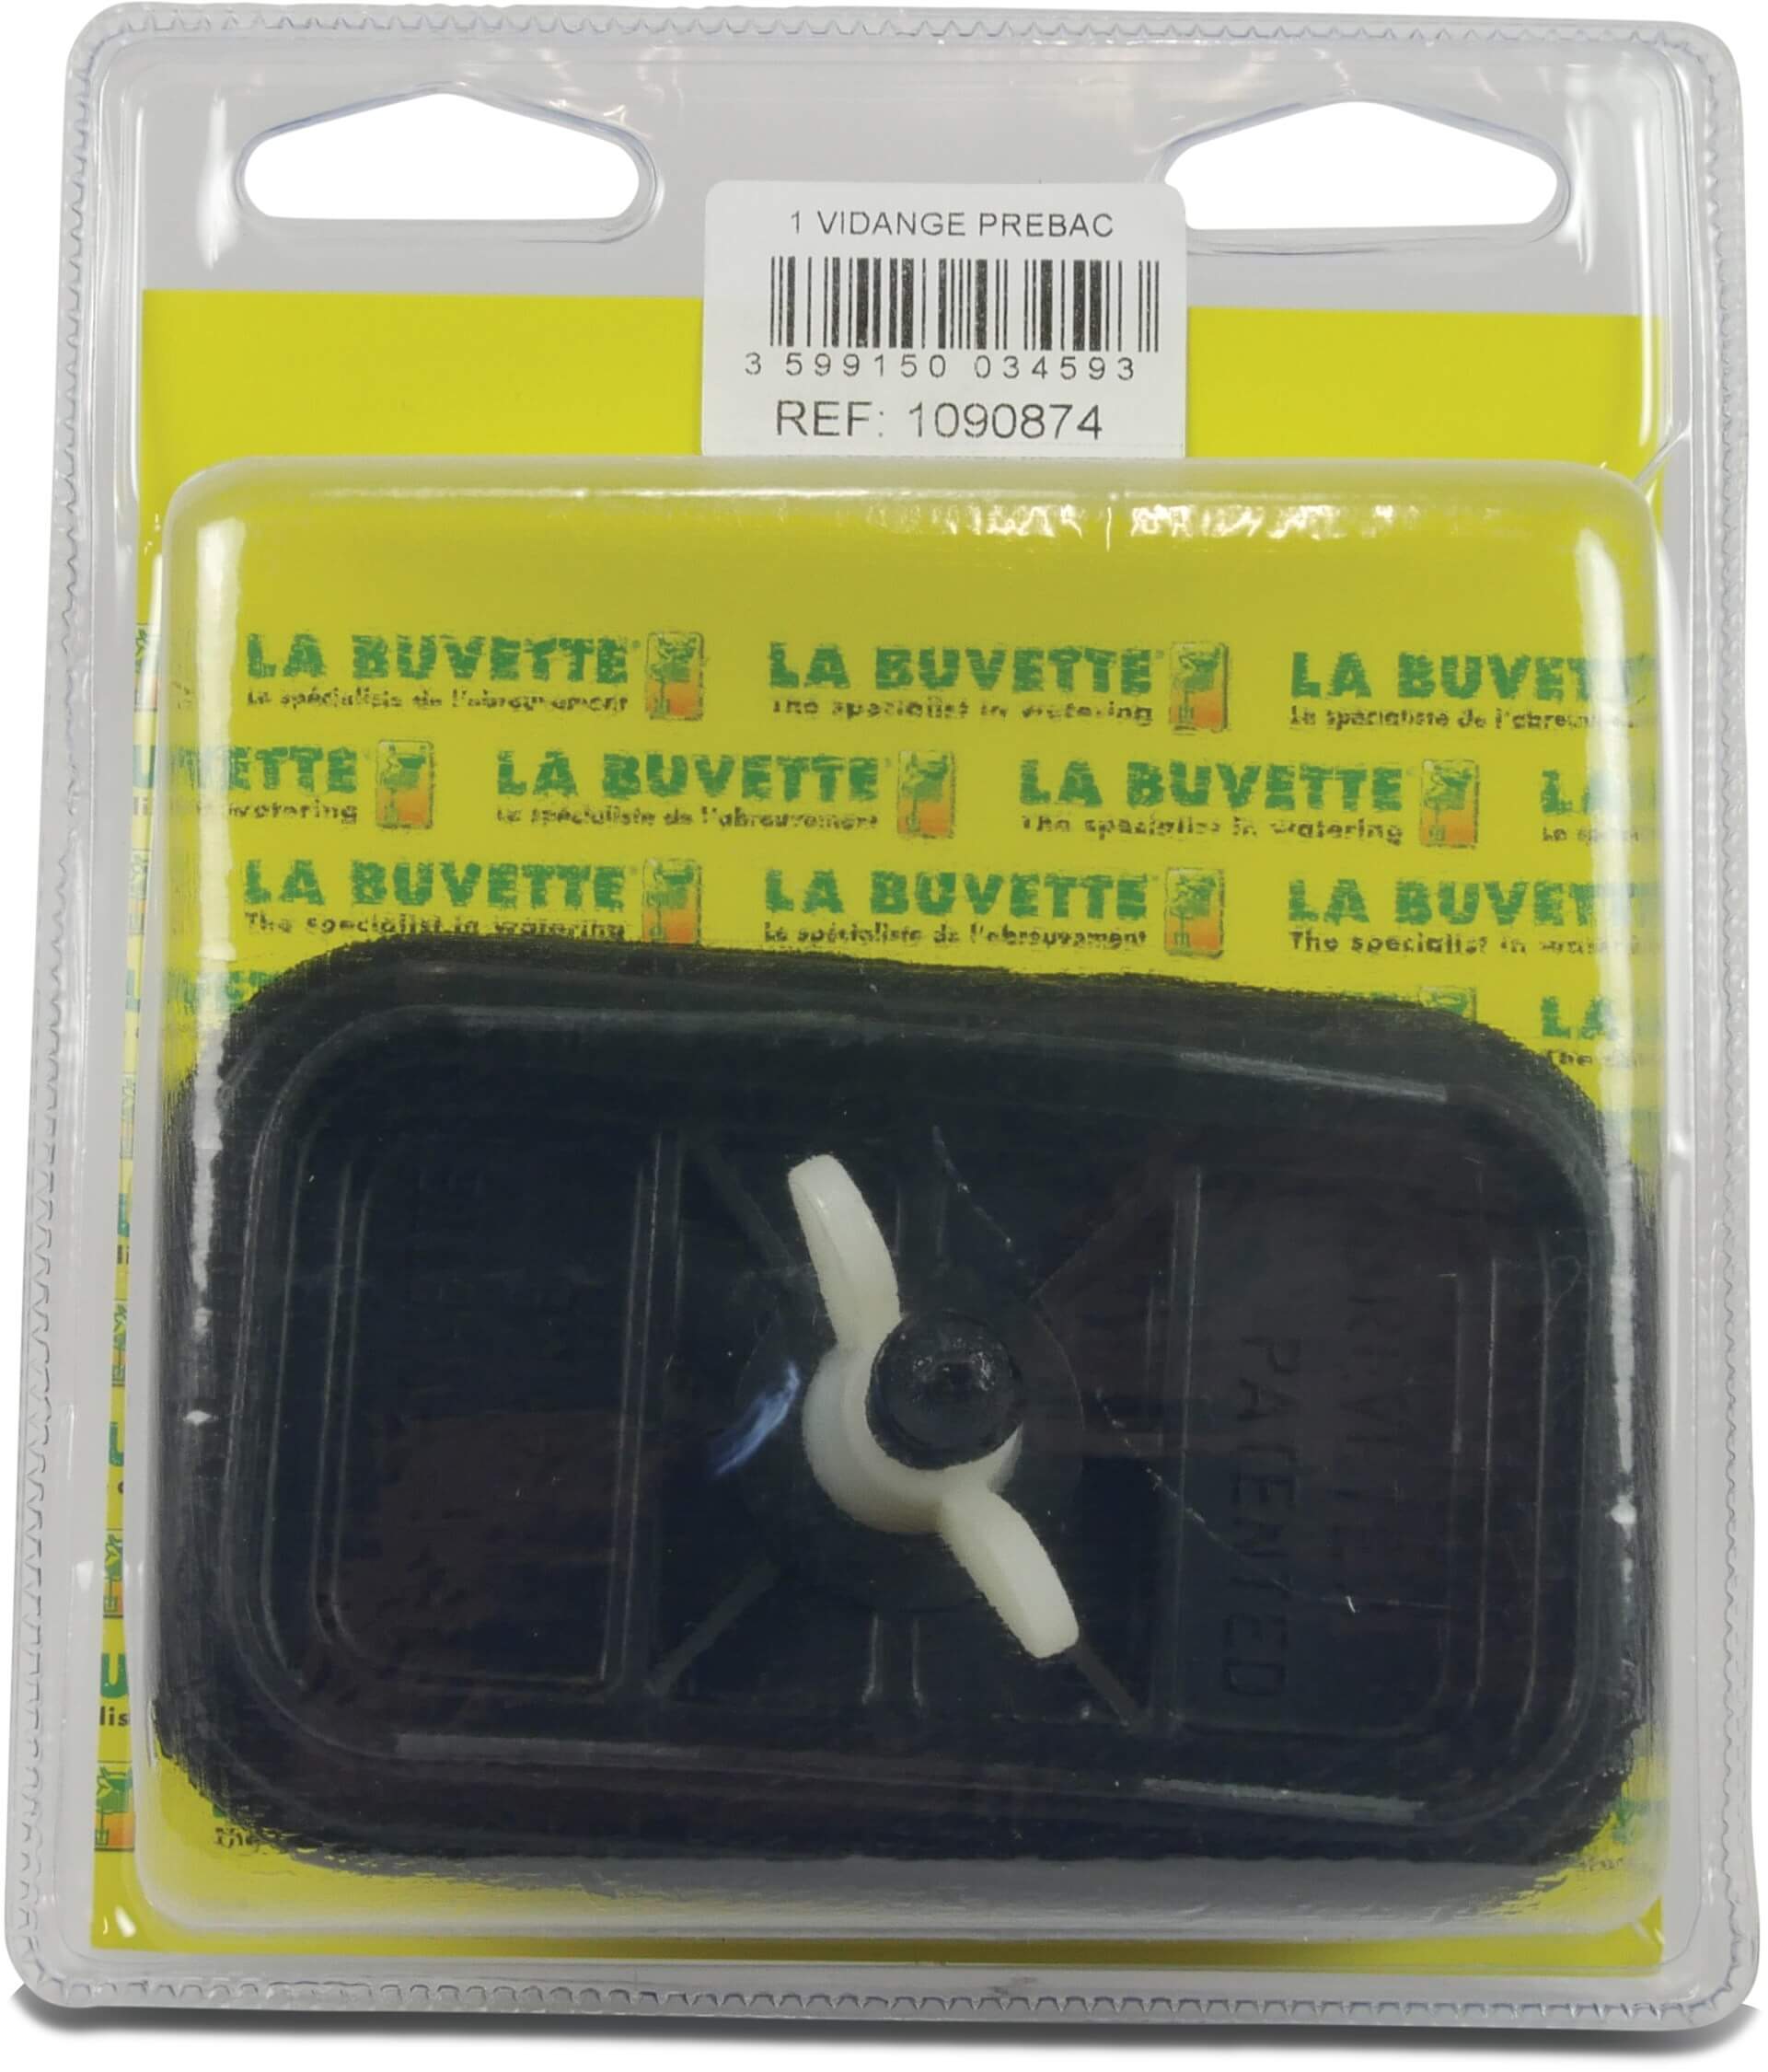 La Buvette Drain plug Prebac blister pack